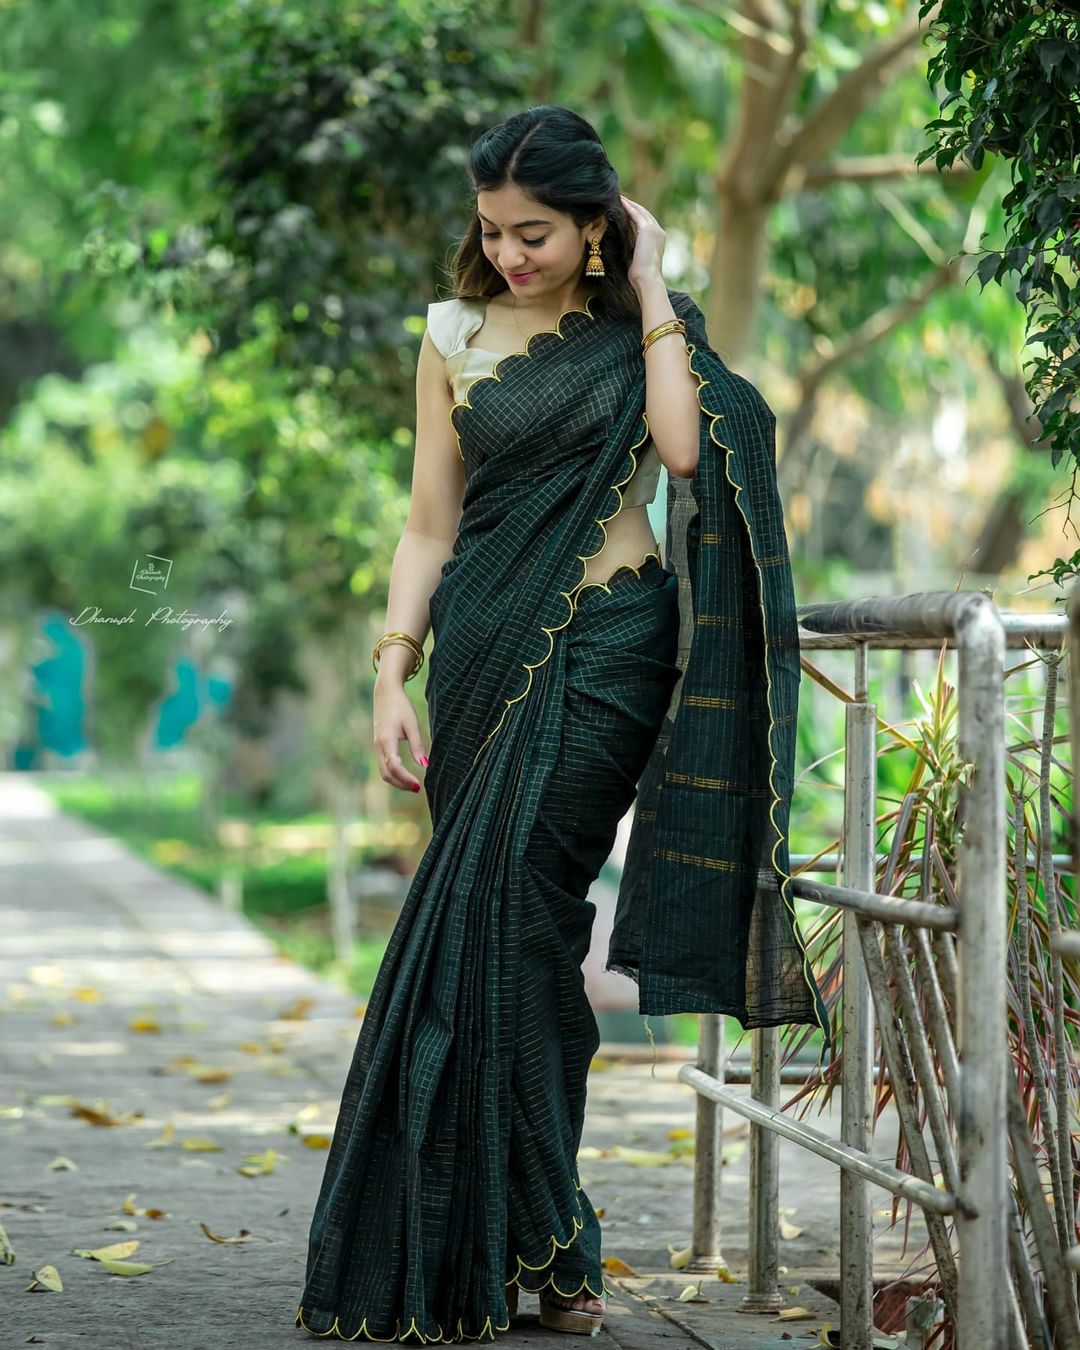 Athmika Sumithran - Made By Chennai Model Latest Black Saree Photos